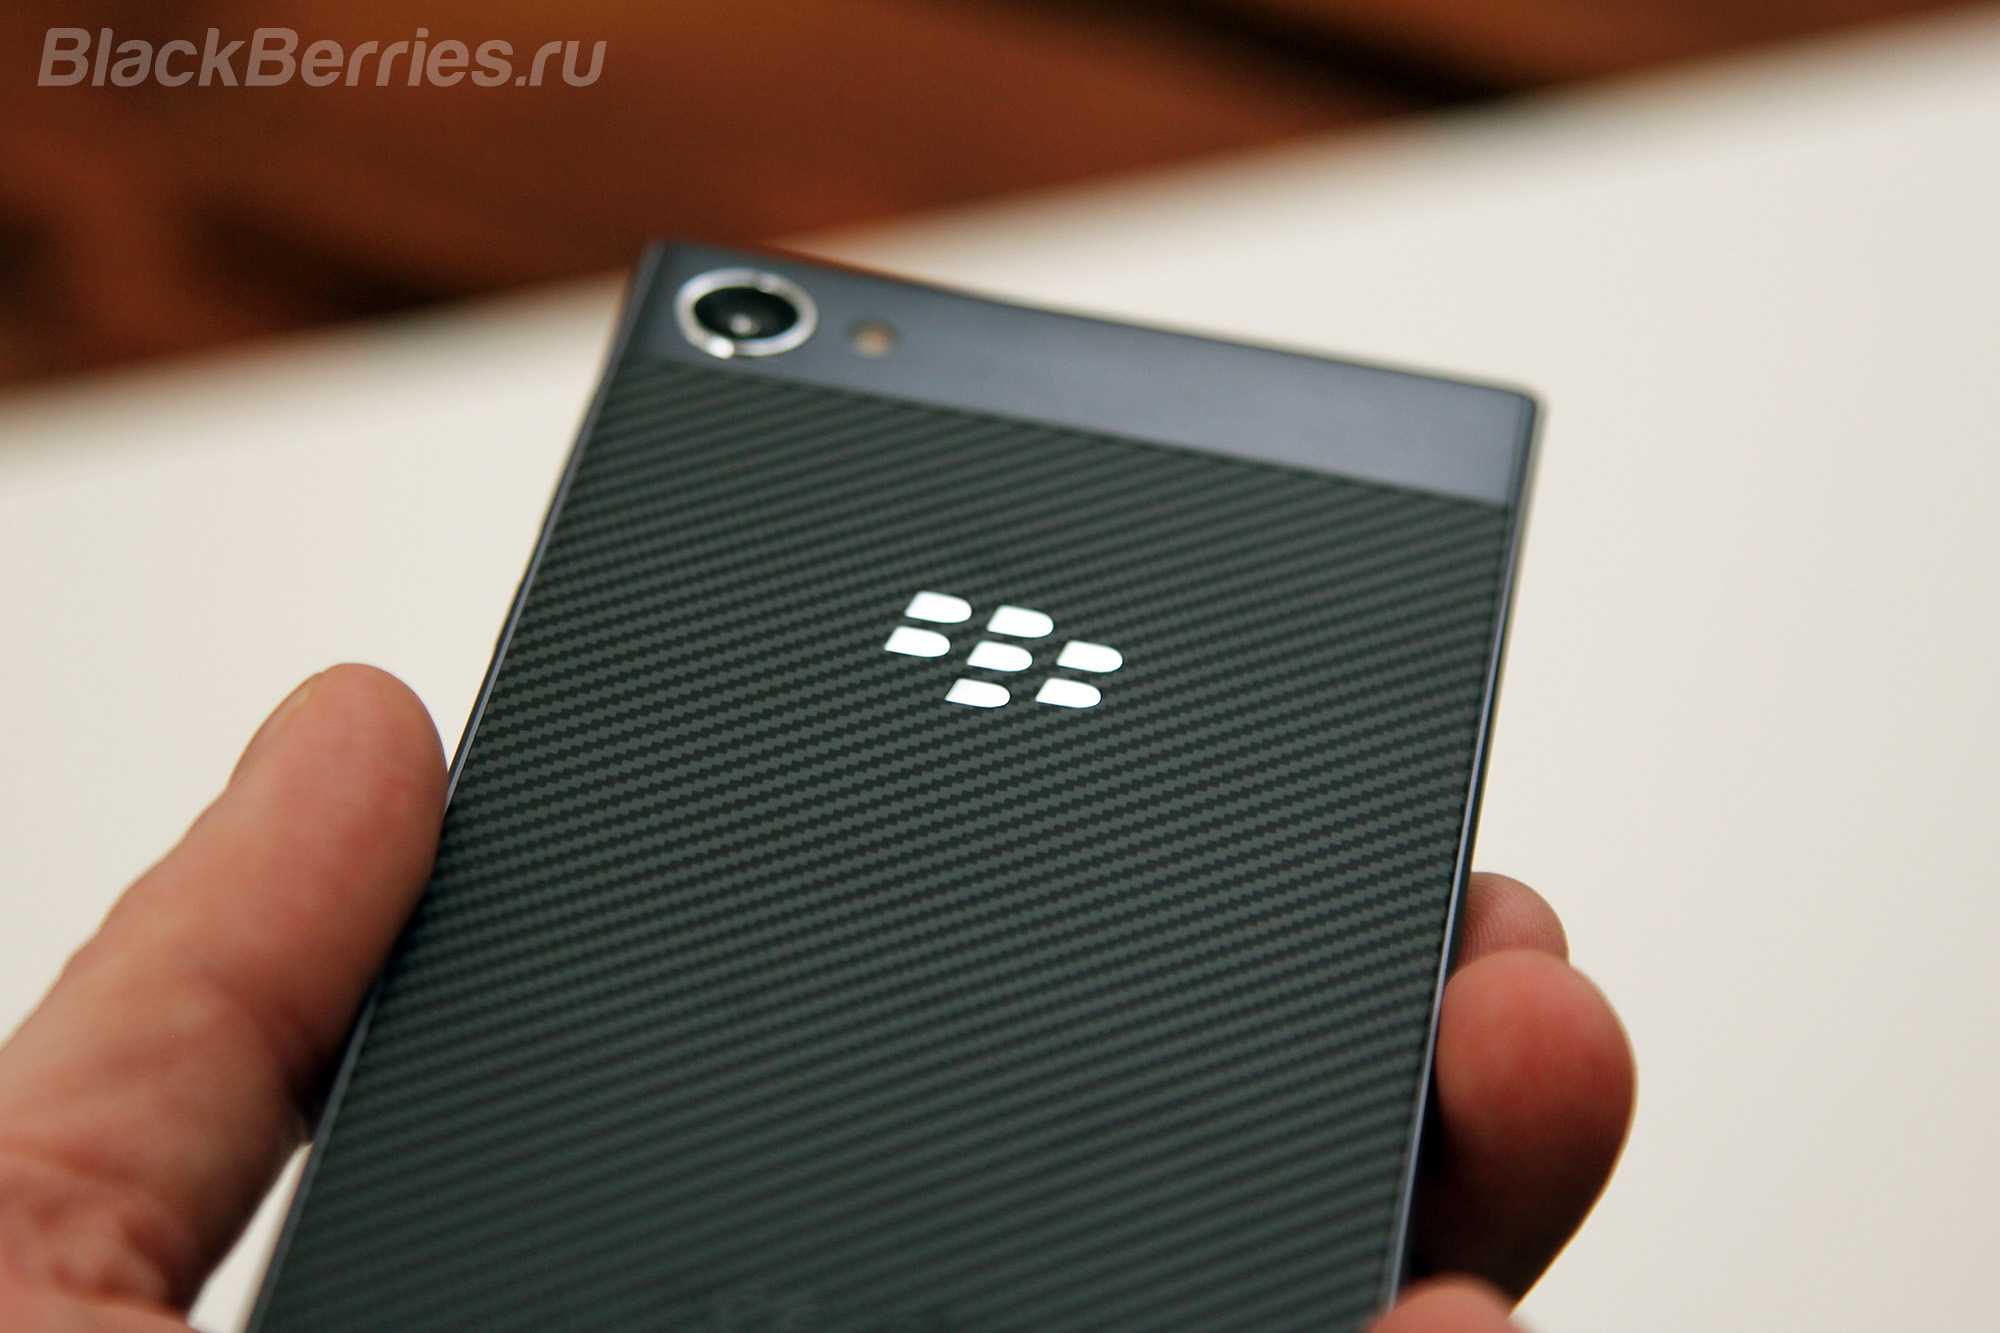 Blackberry bold 9790 (черный)